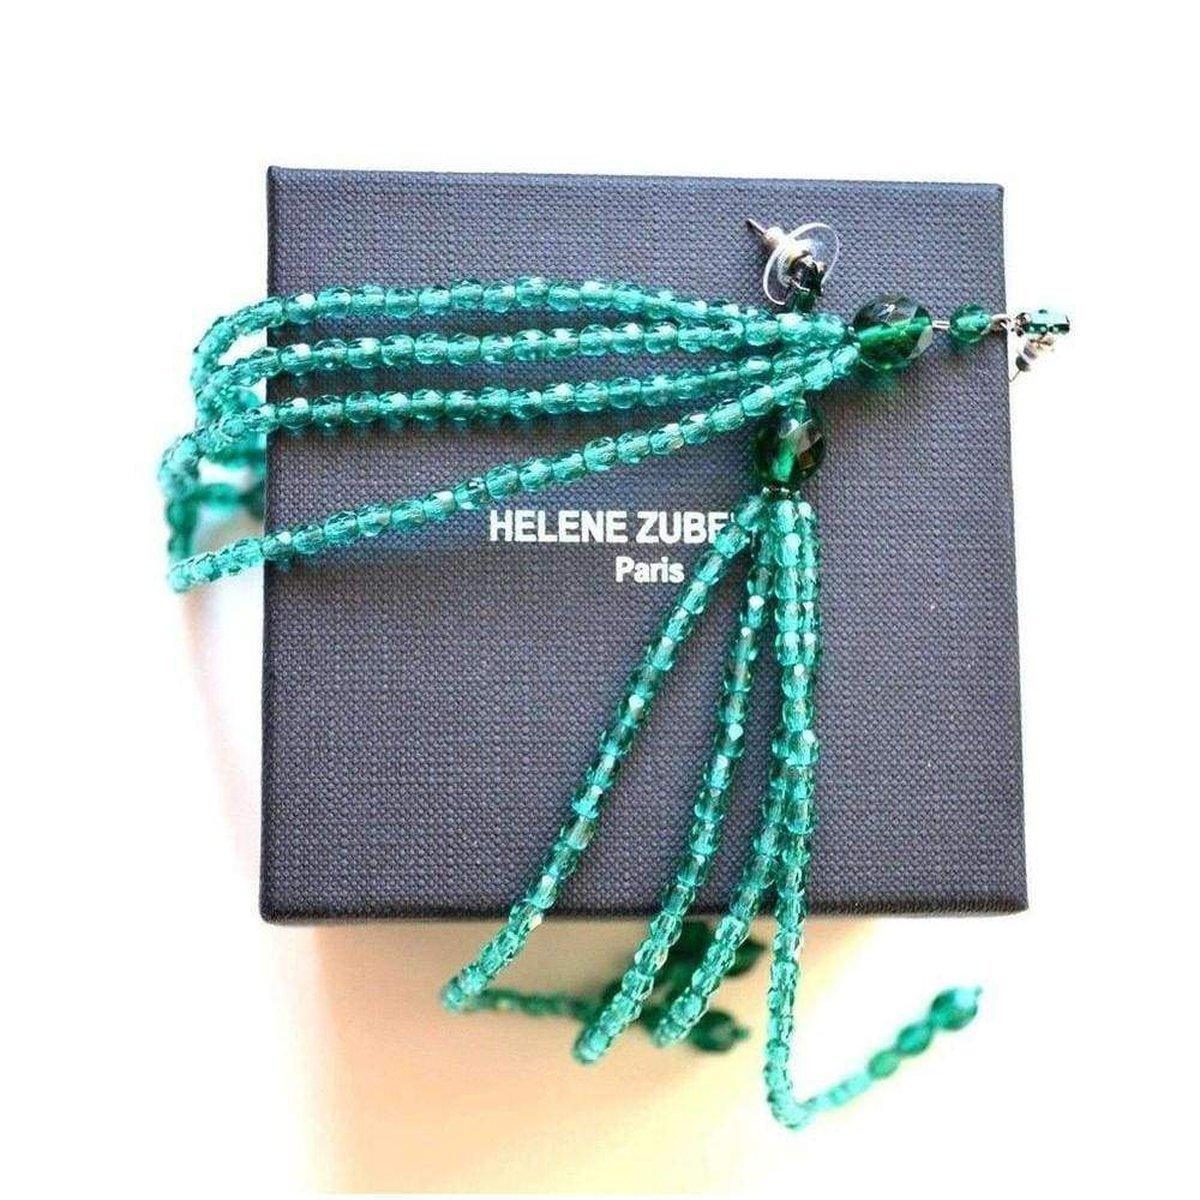  Helene ZubeldiaGreen Crystal & Glass Beads Dangling Earrings - Runway Catalog